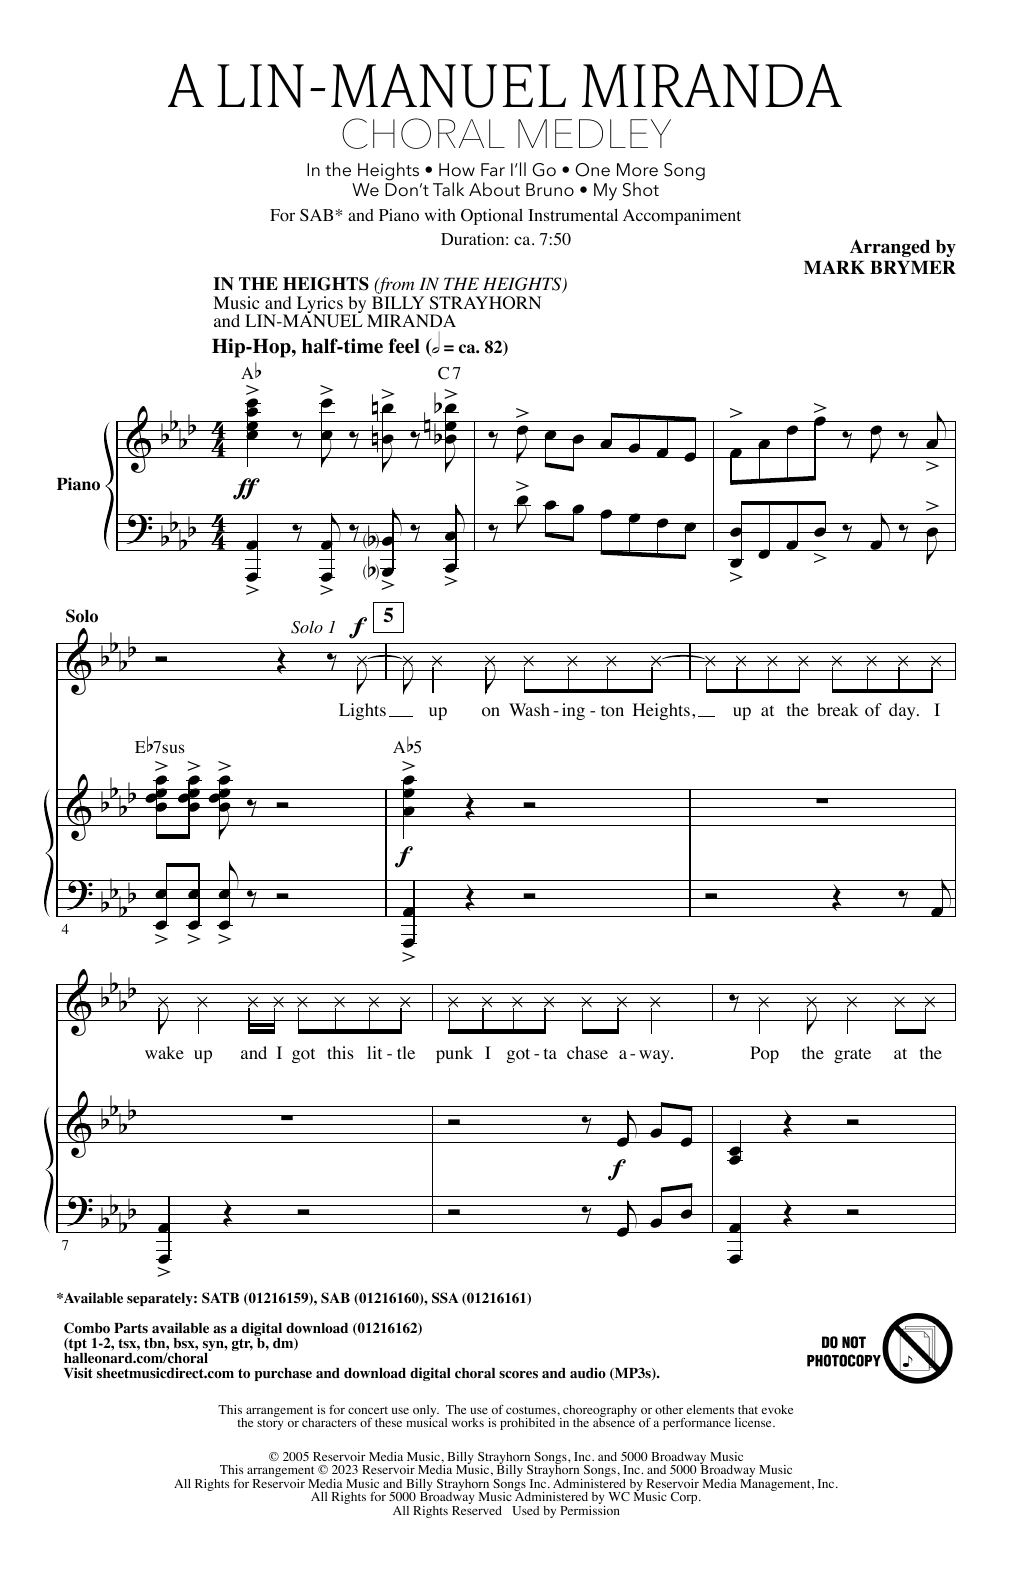 Lin-Manuel Miranda A Lin-Manuel Miranda Choral Medley (arr. Mark Brymer) Sheet Music Notes & Chords for SATB Choir - Download or Print PDF